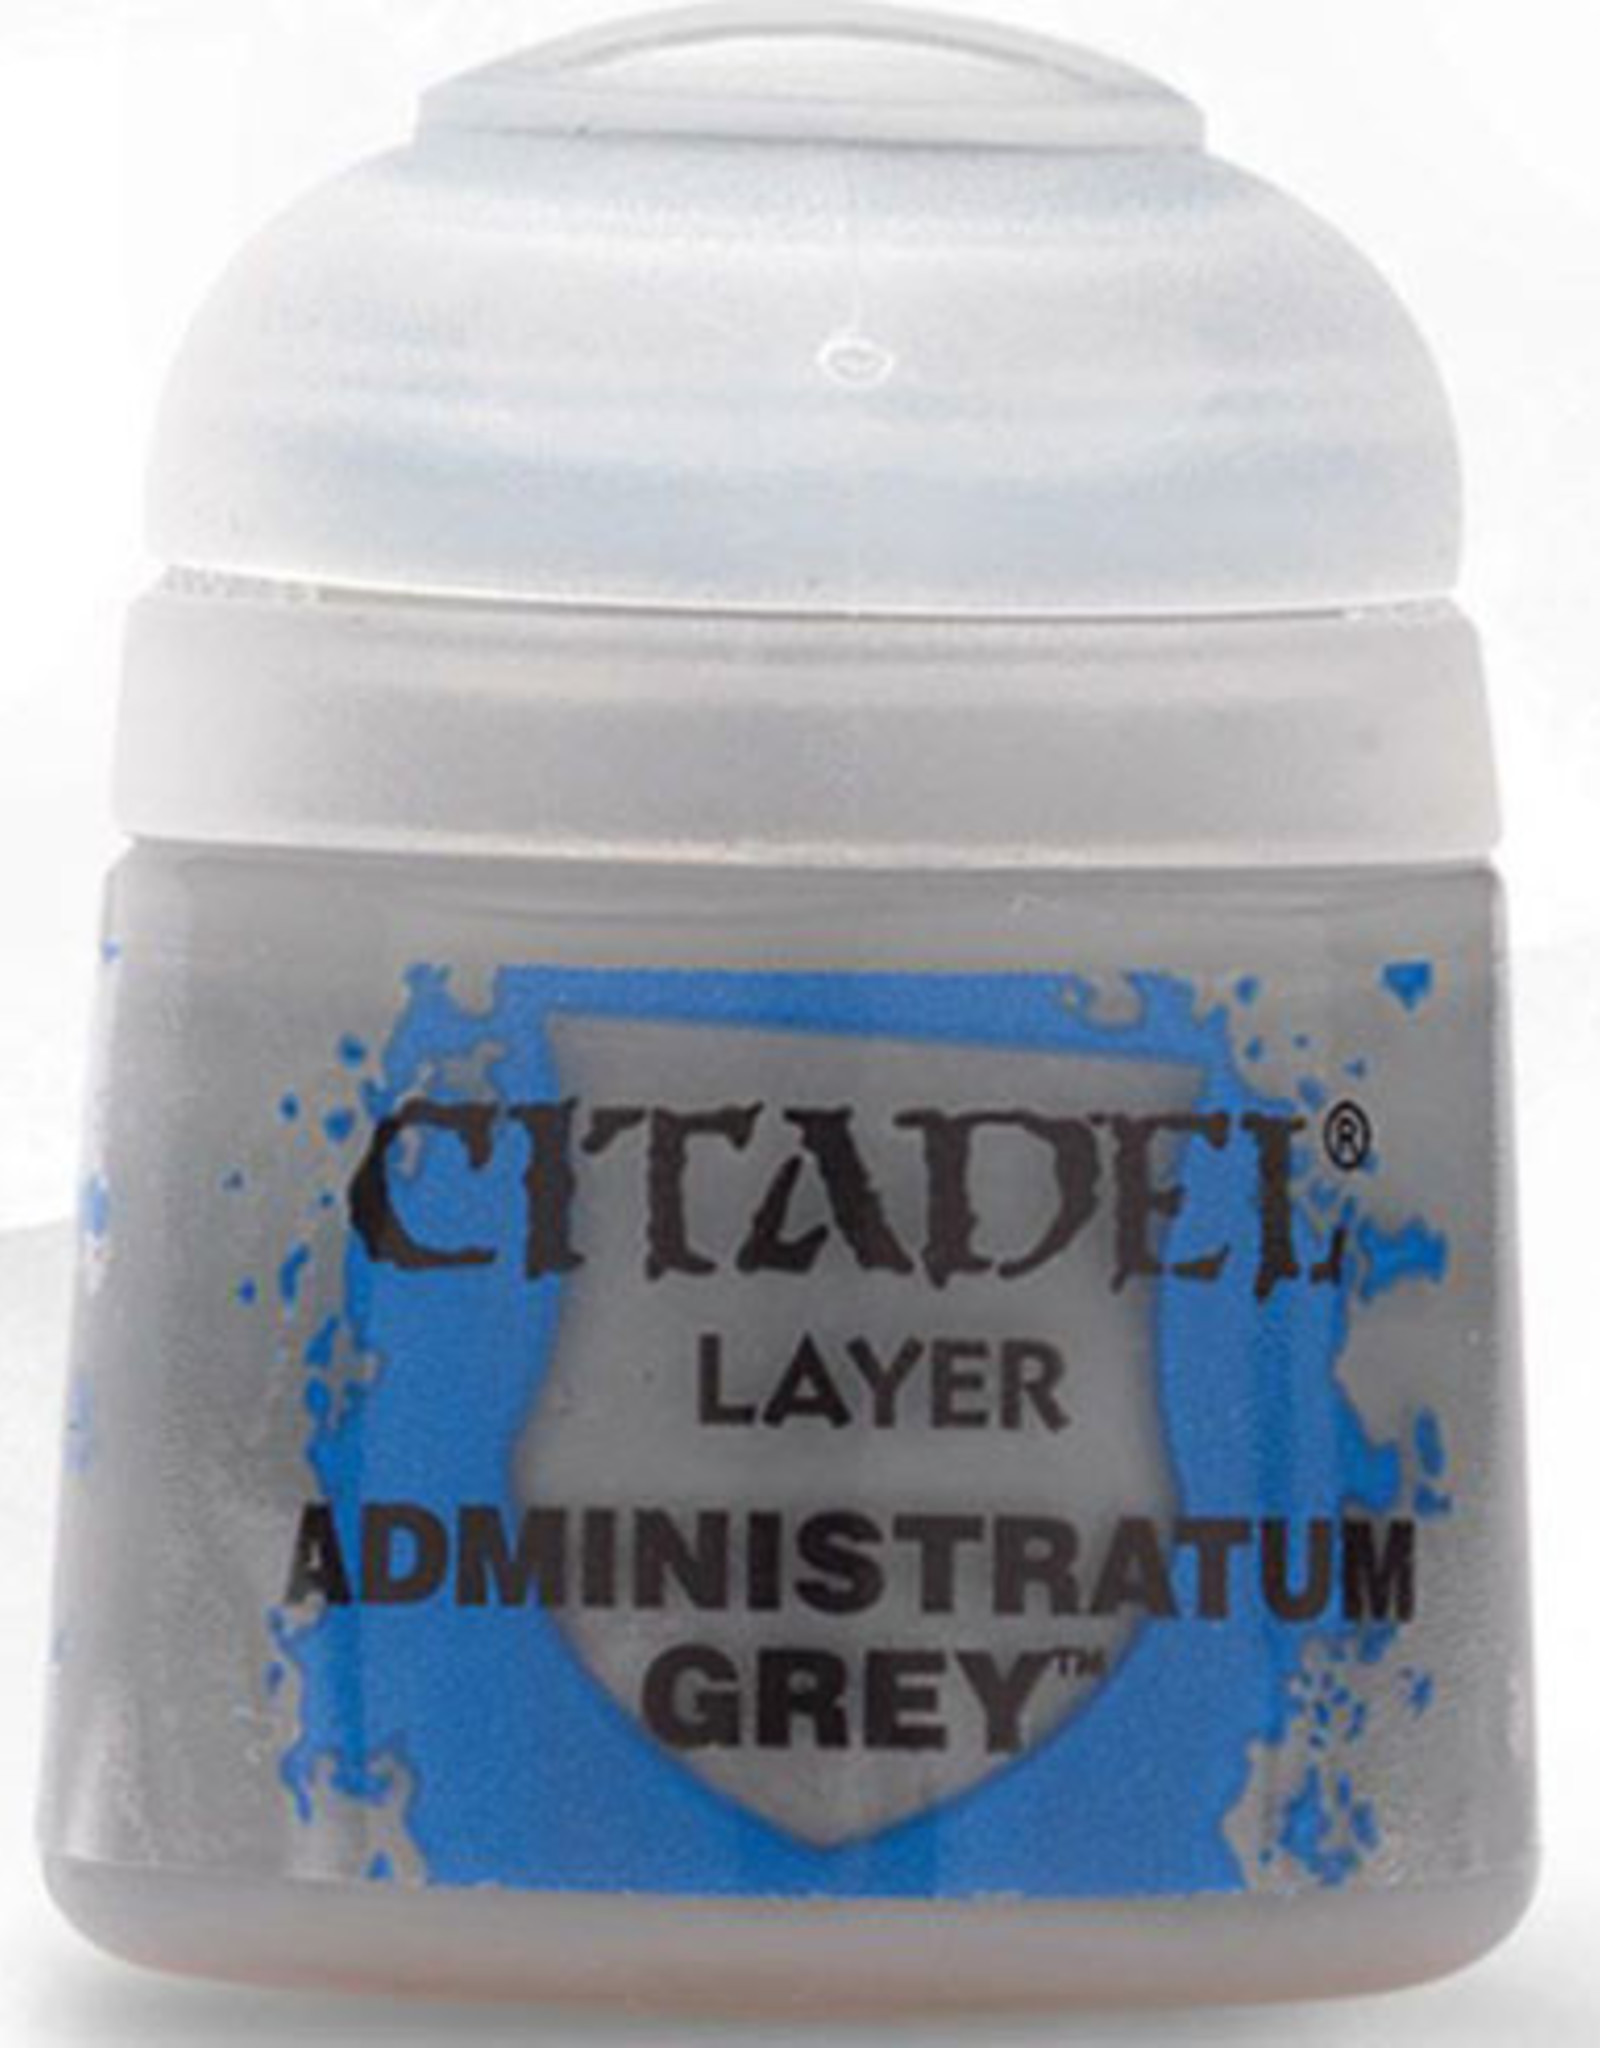 Games Workshop Citadel Layer: Administratum Grey